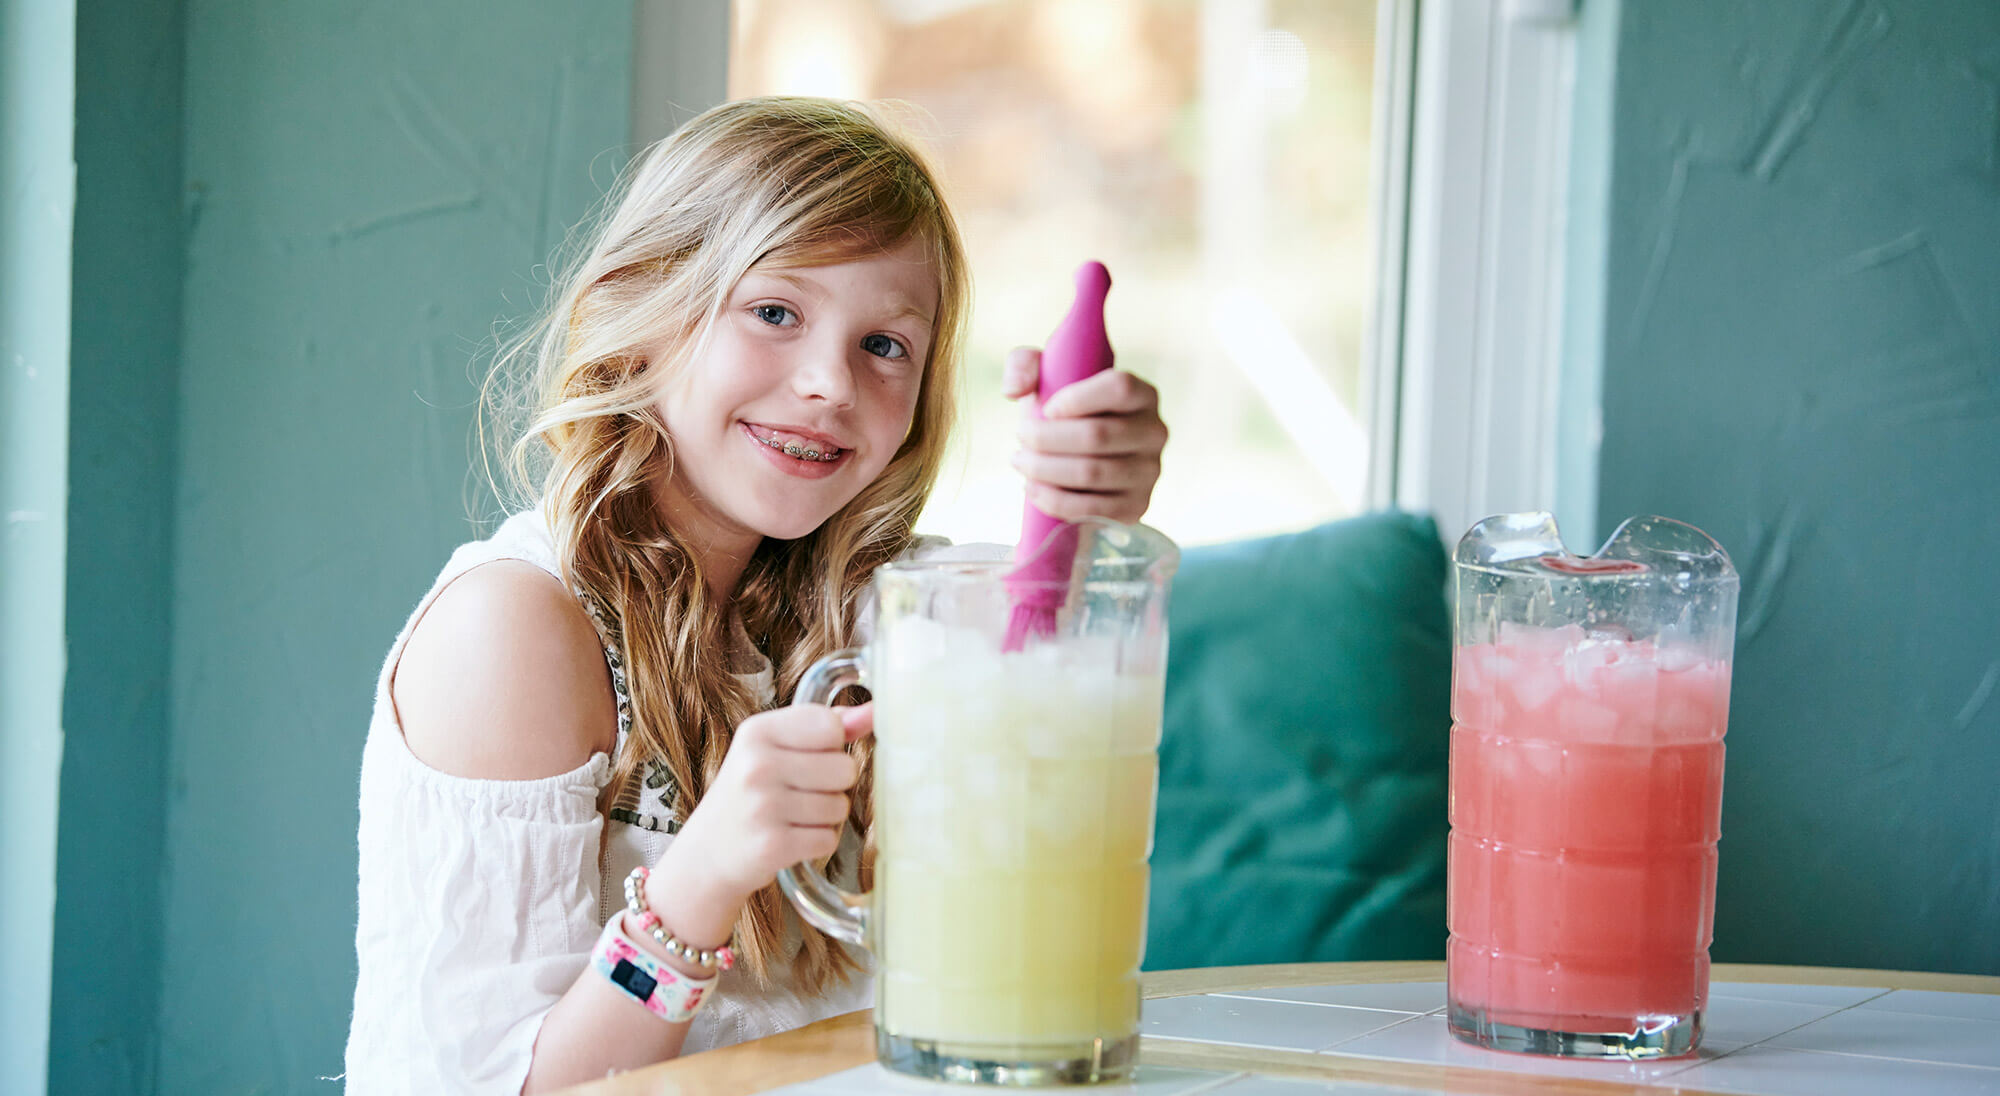 Young girl smiling while making lemonade